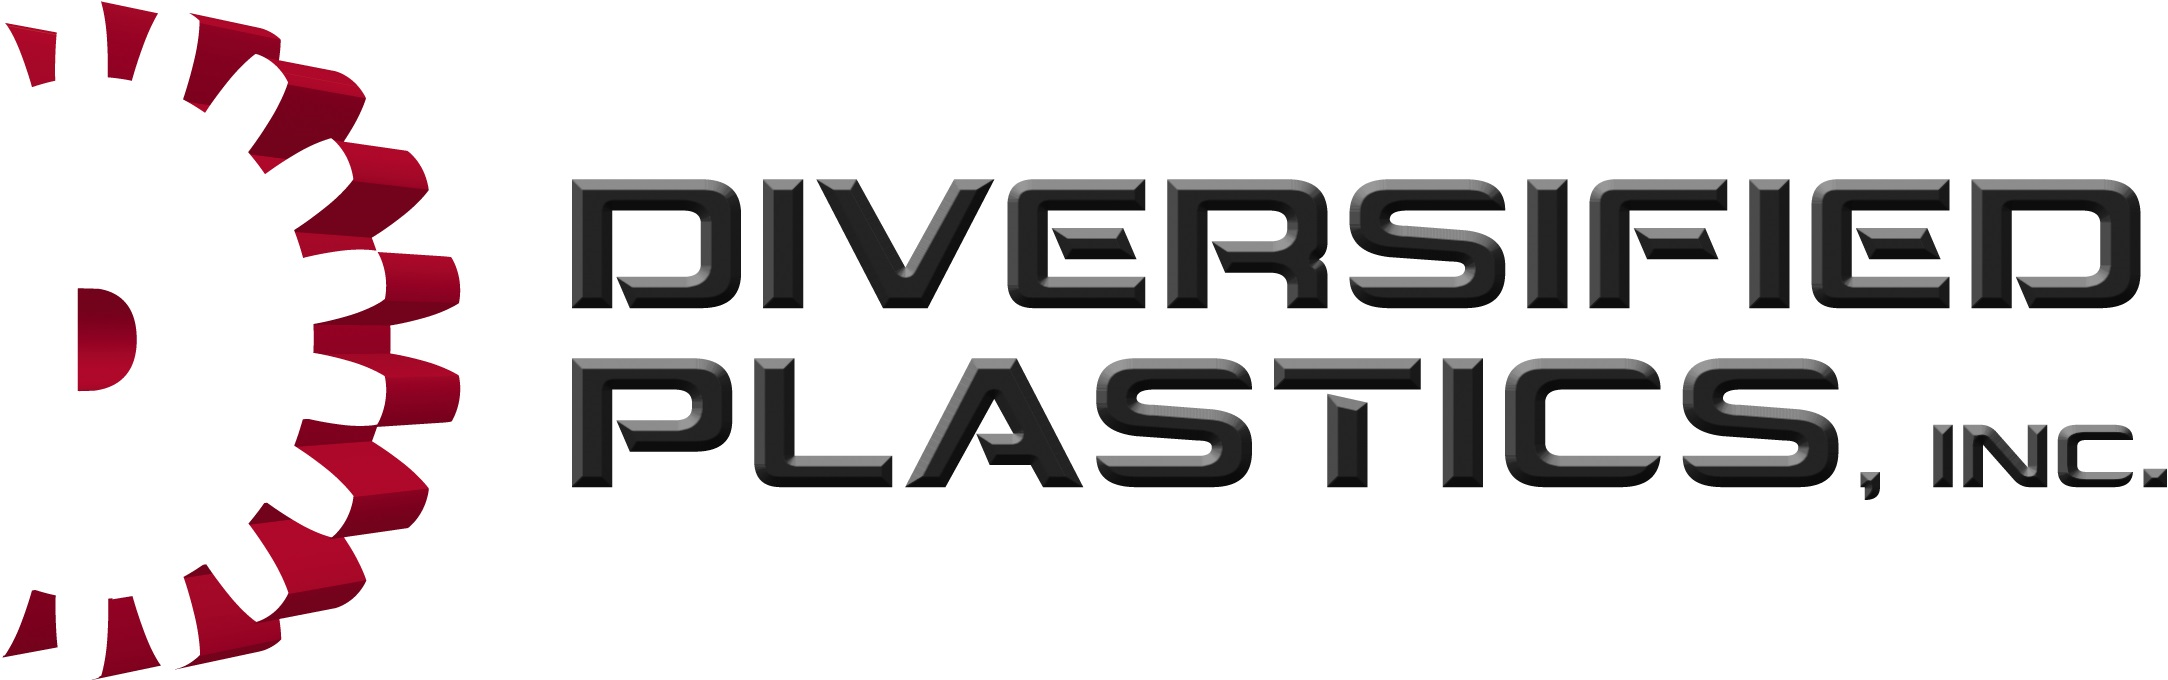 Diversified Plastics Company Logo